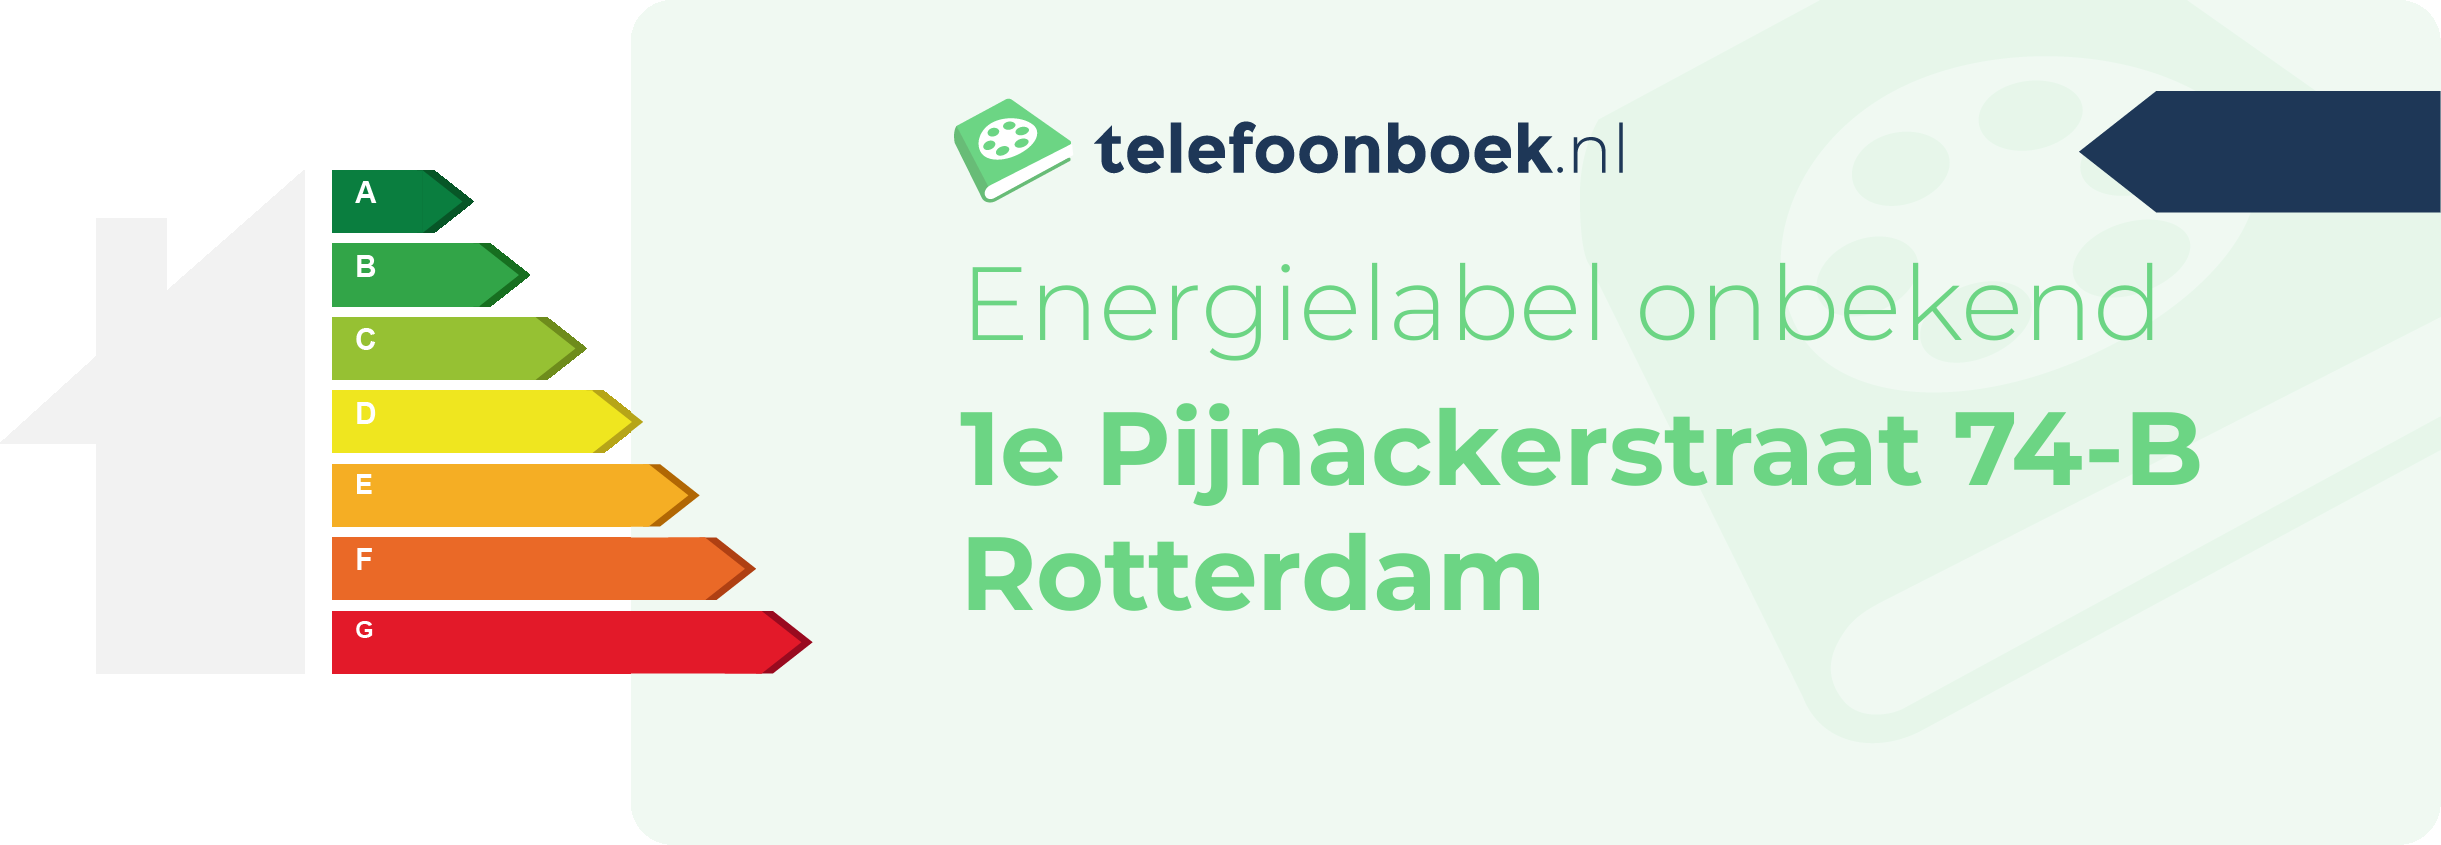 Energielabel 1e Pijnackerstraat 74-B Rotterdam